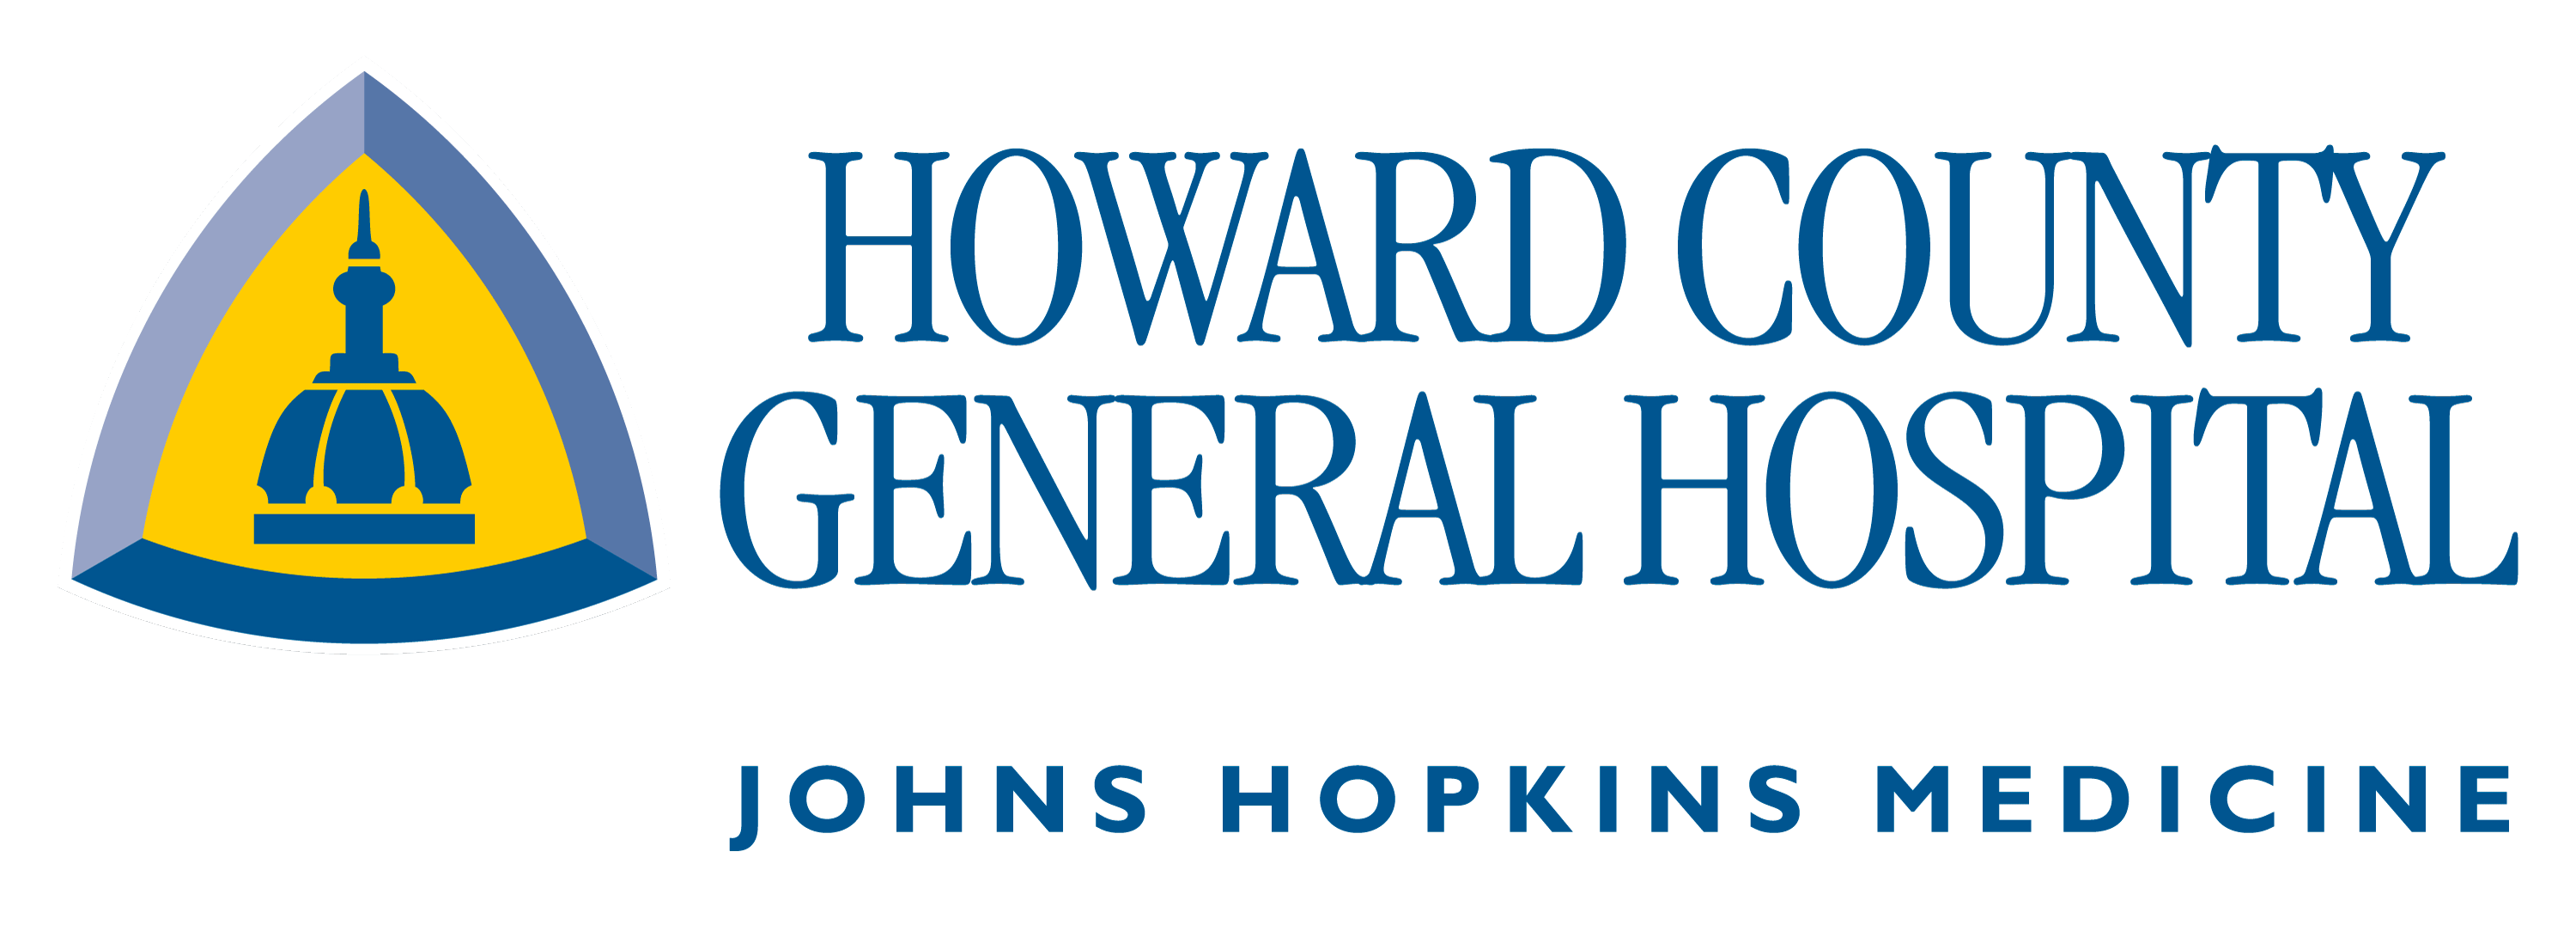 Johns Hopkins General Hospital